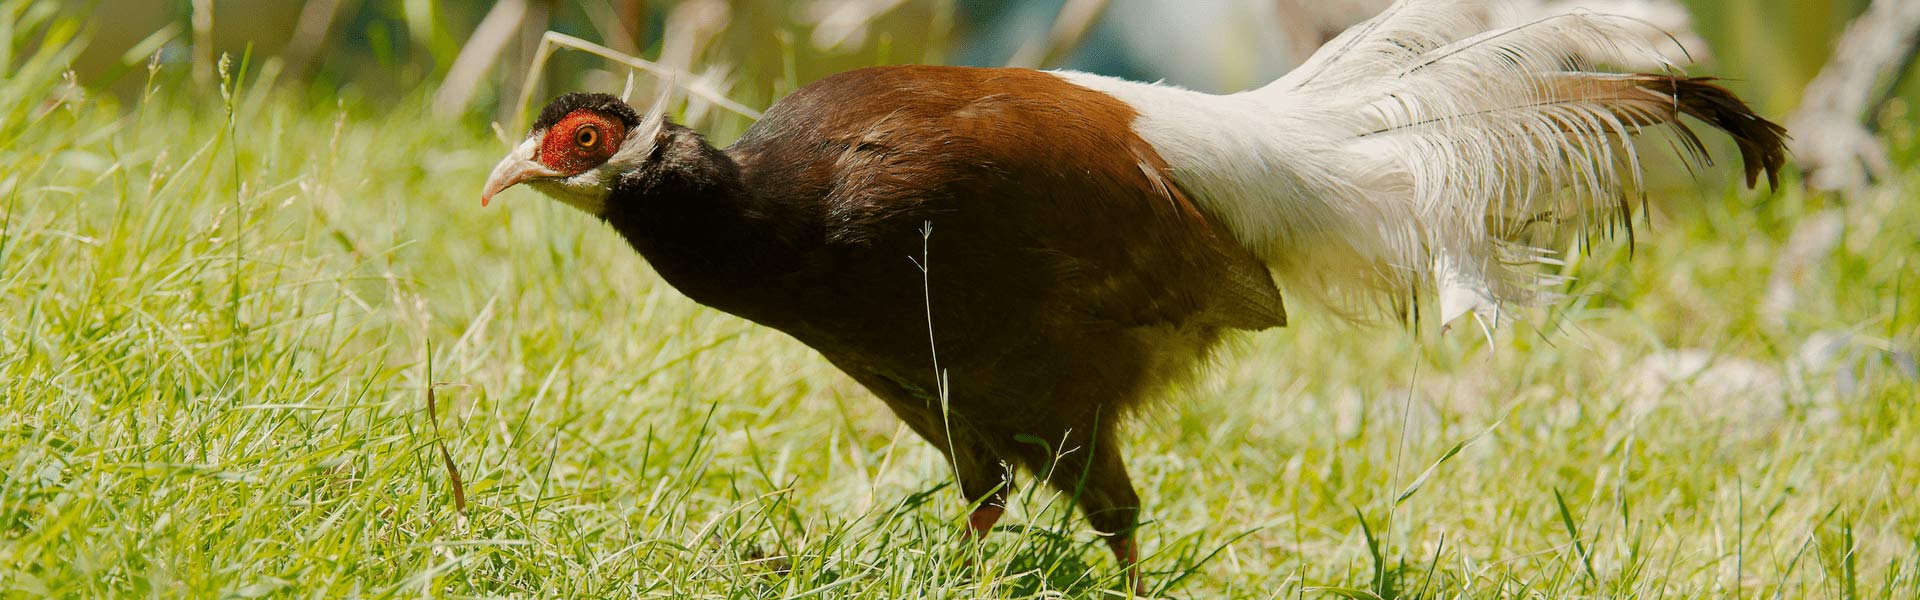 Brown Eared Pheasant walking on grass